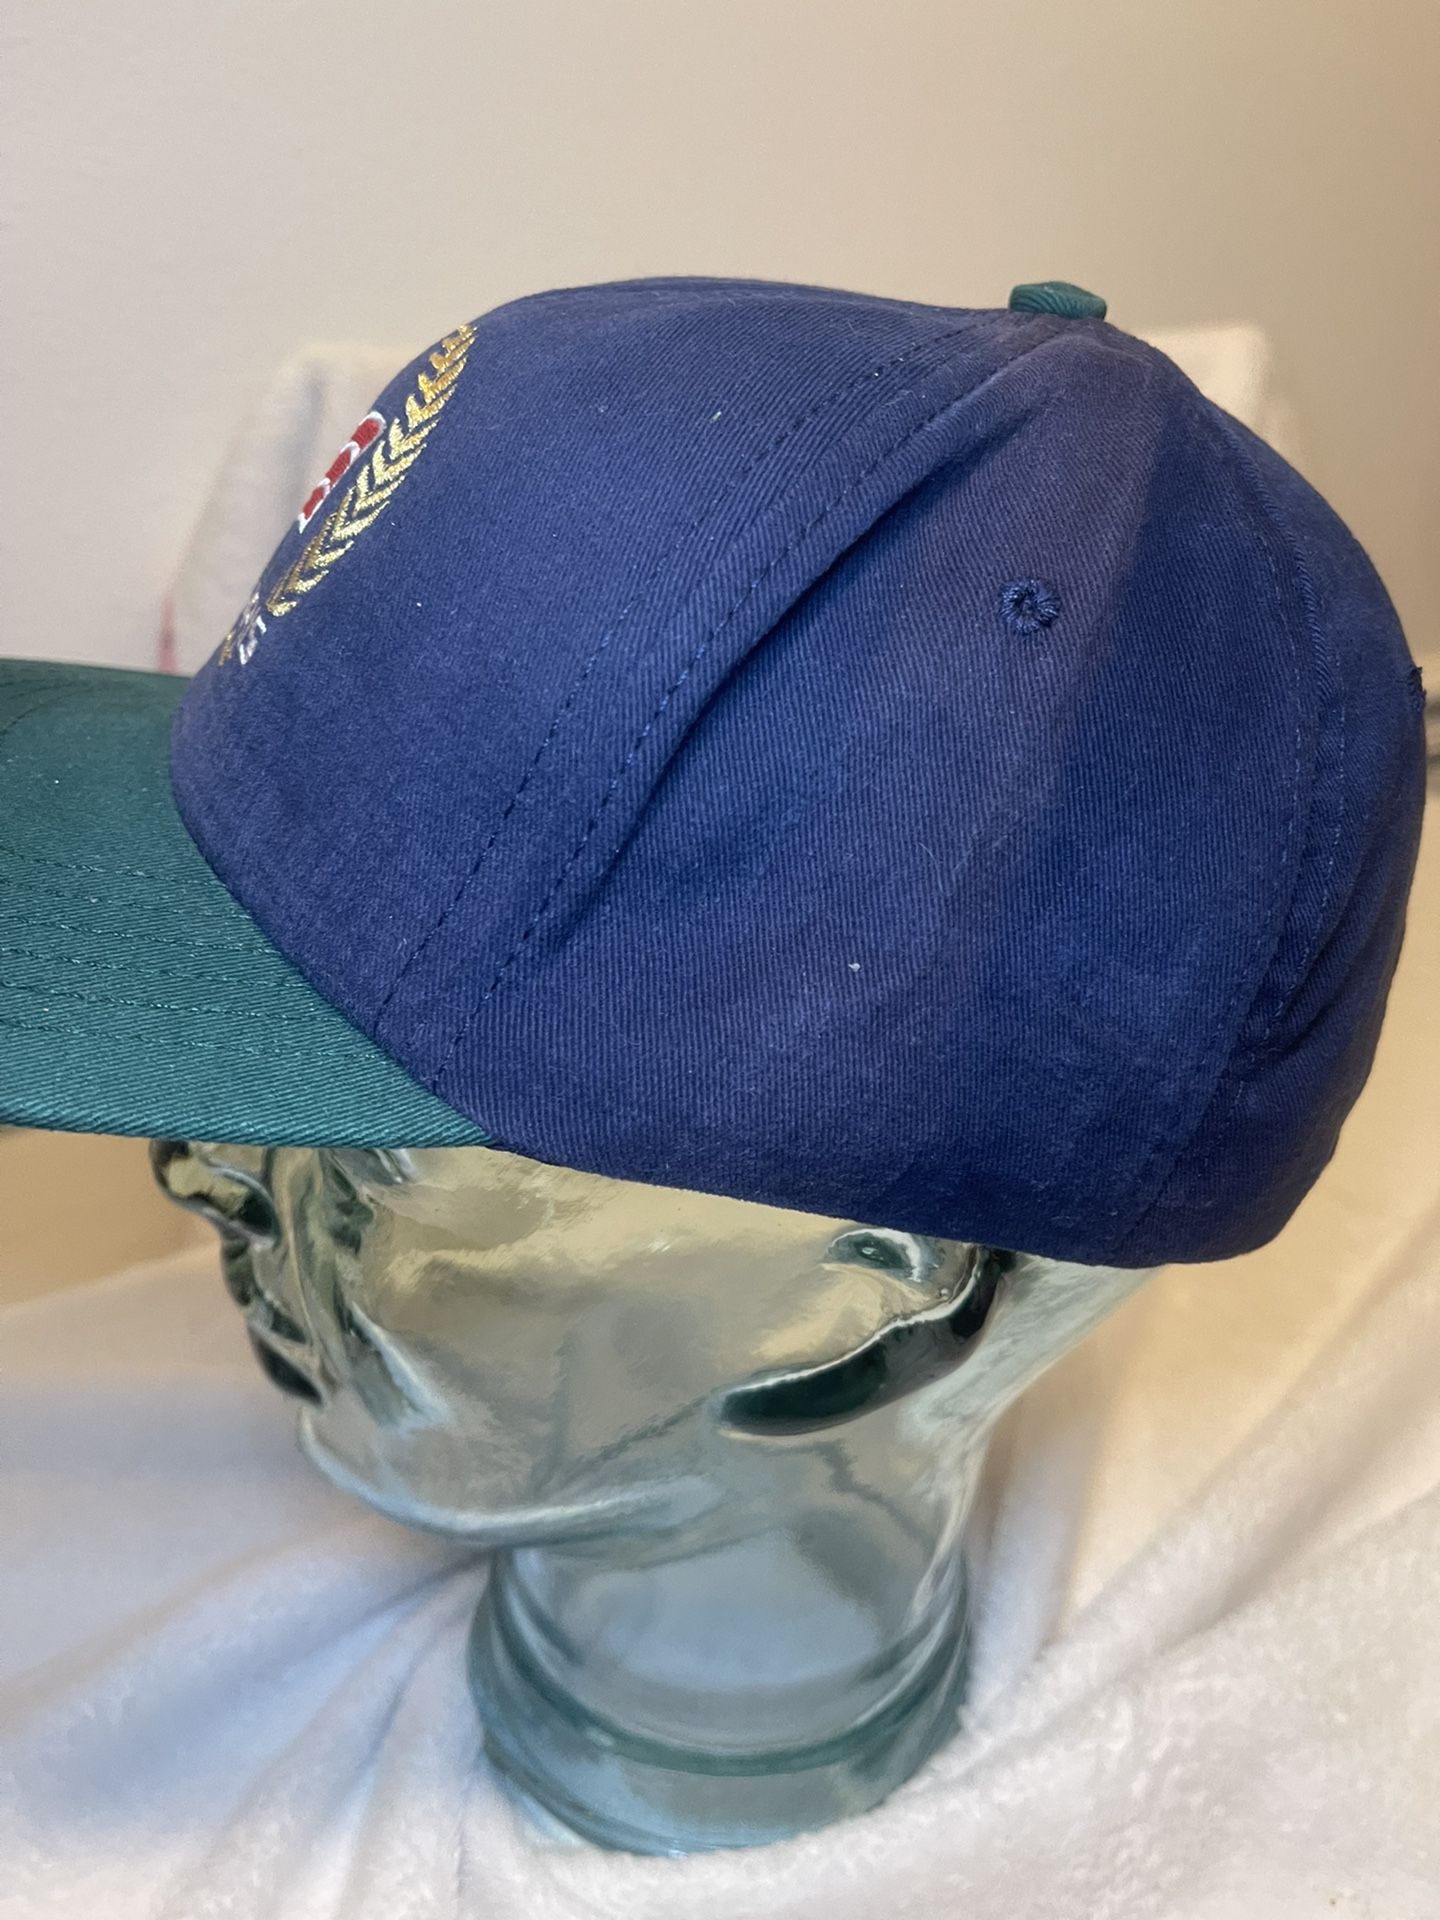 Vintage Polaris Promo Snapback Cap Hat Usa Snowmobile Atv Bmx